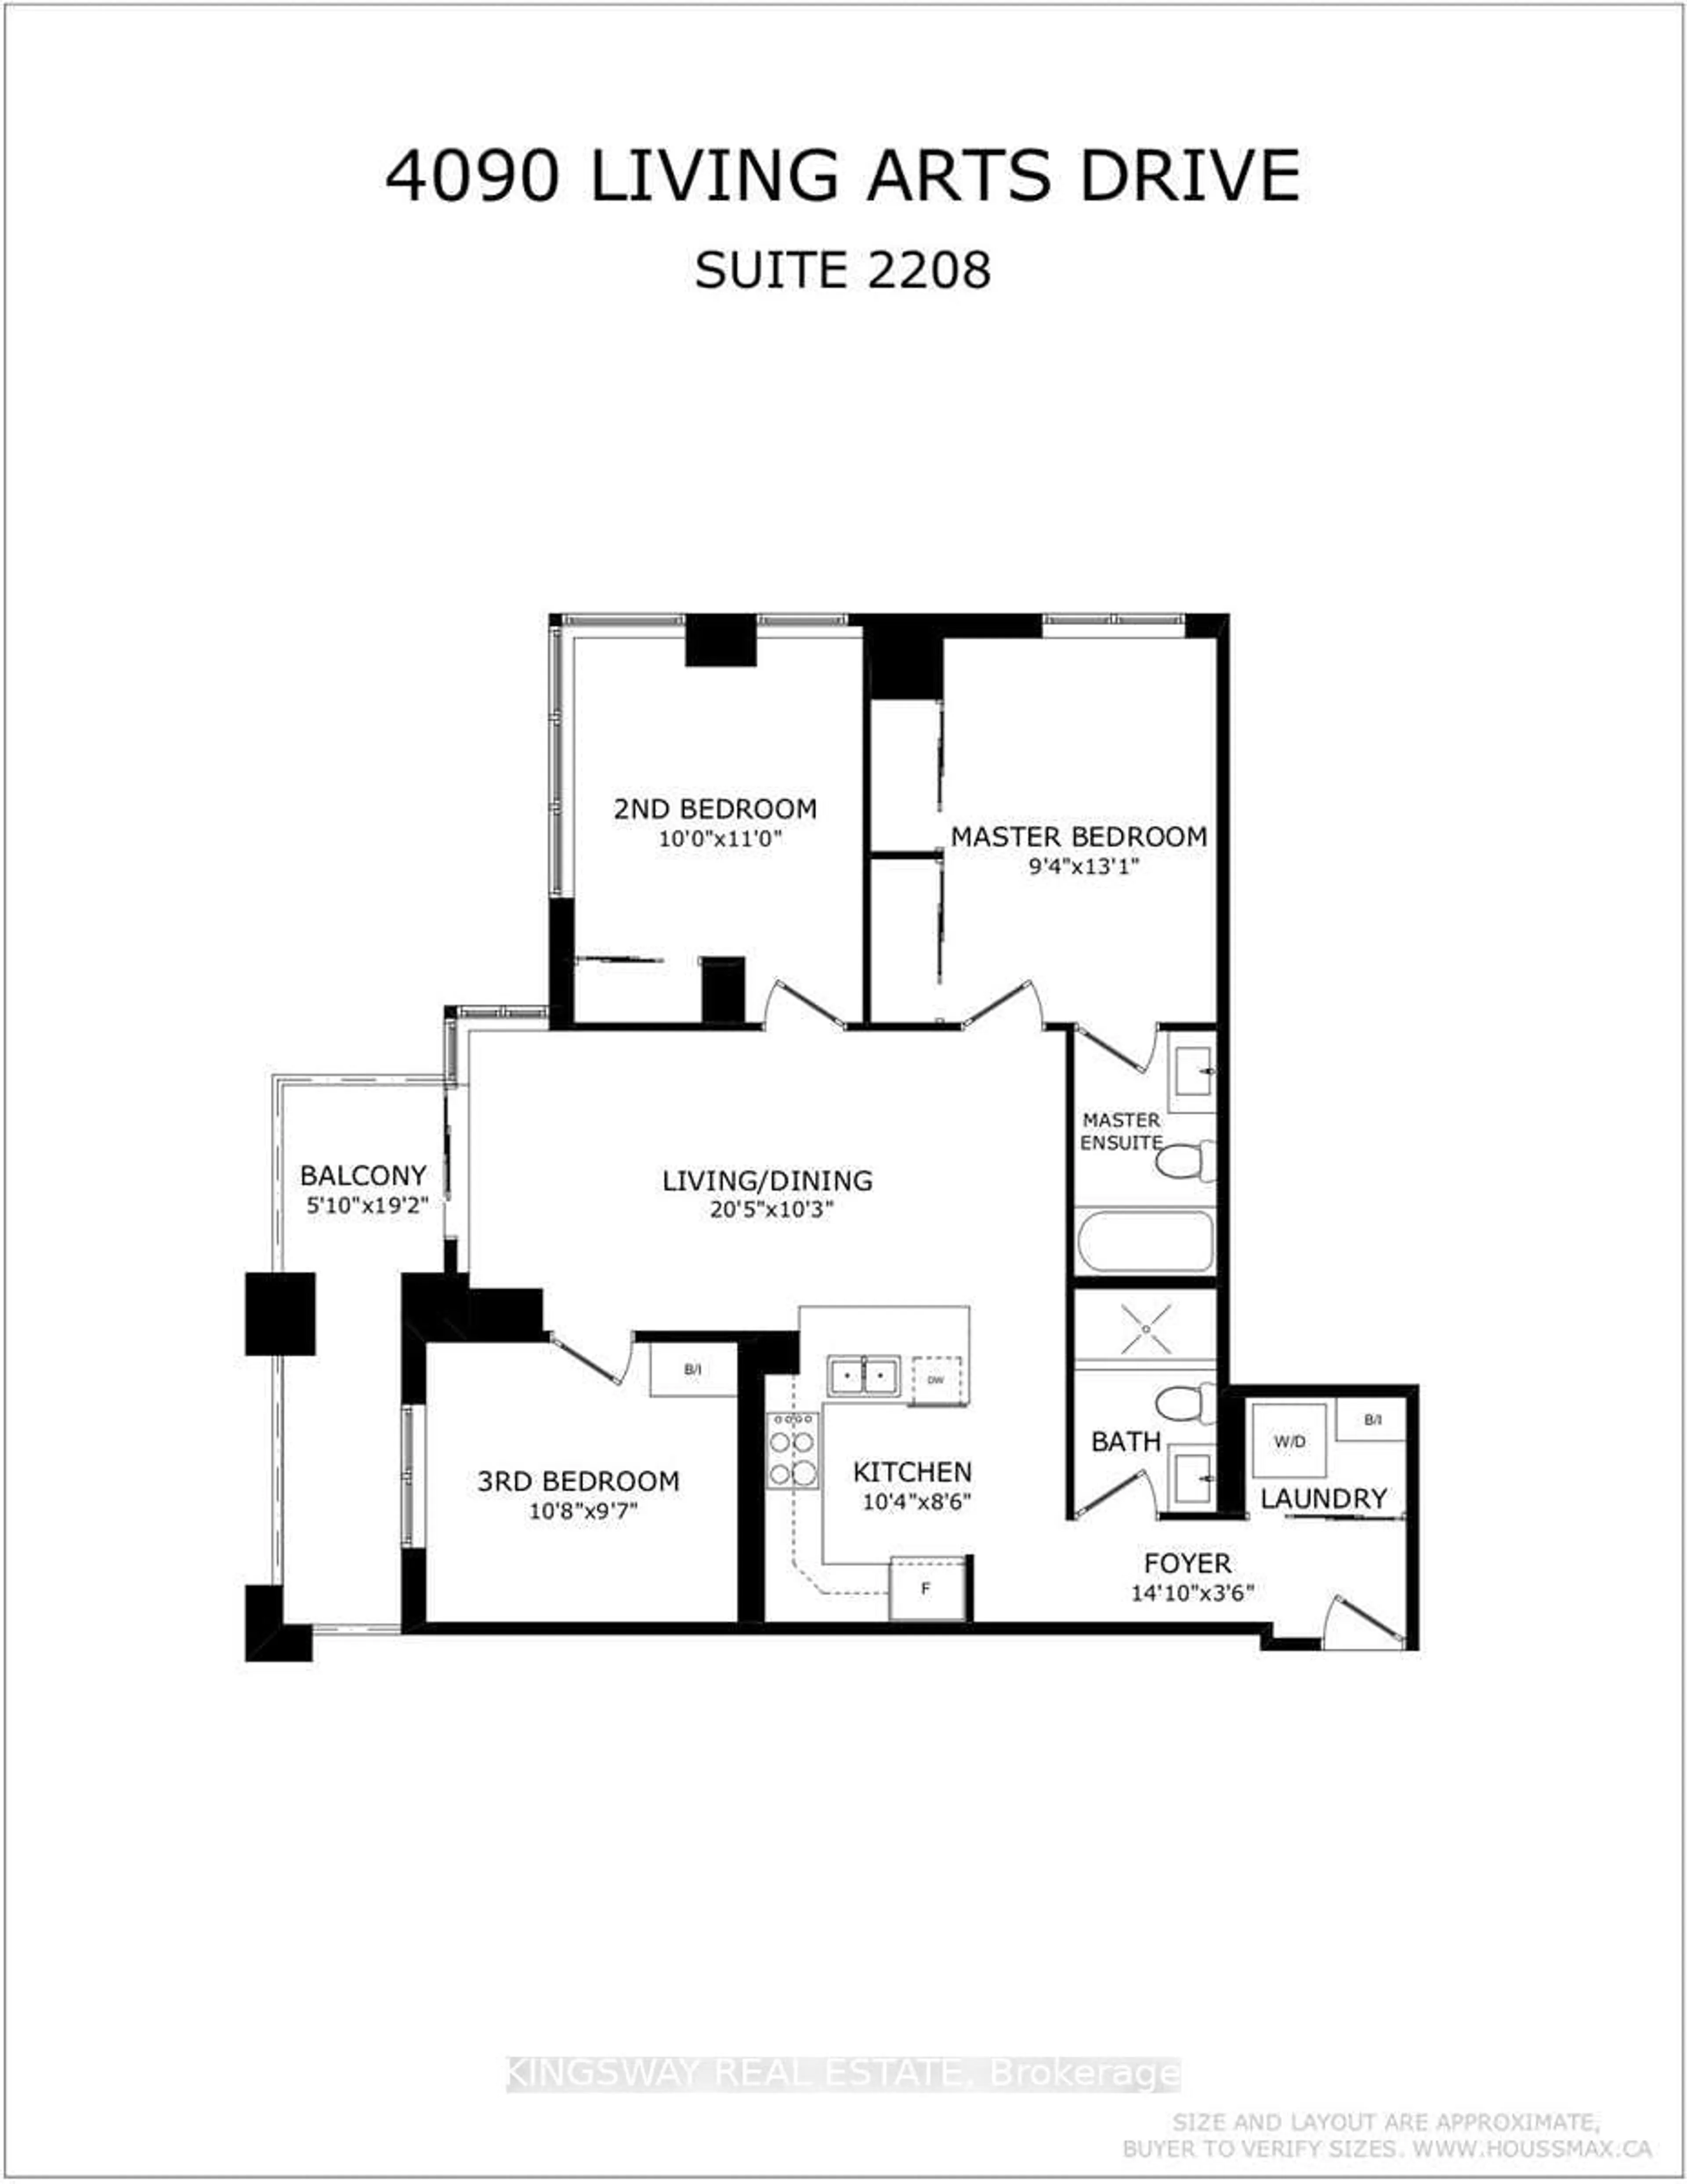 Floor plan for 4090 Living Arts Dr #2208, Mississauga Ontario L5B 4M8